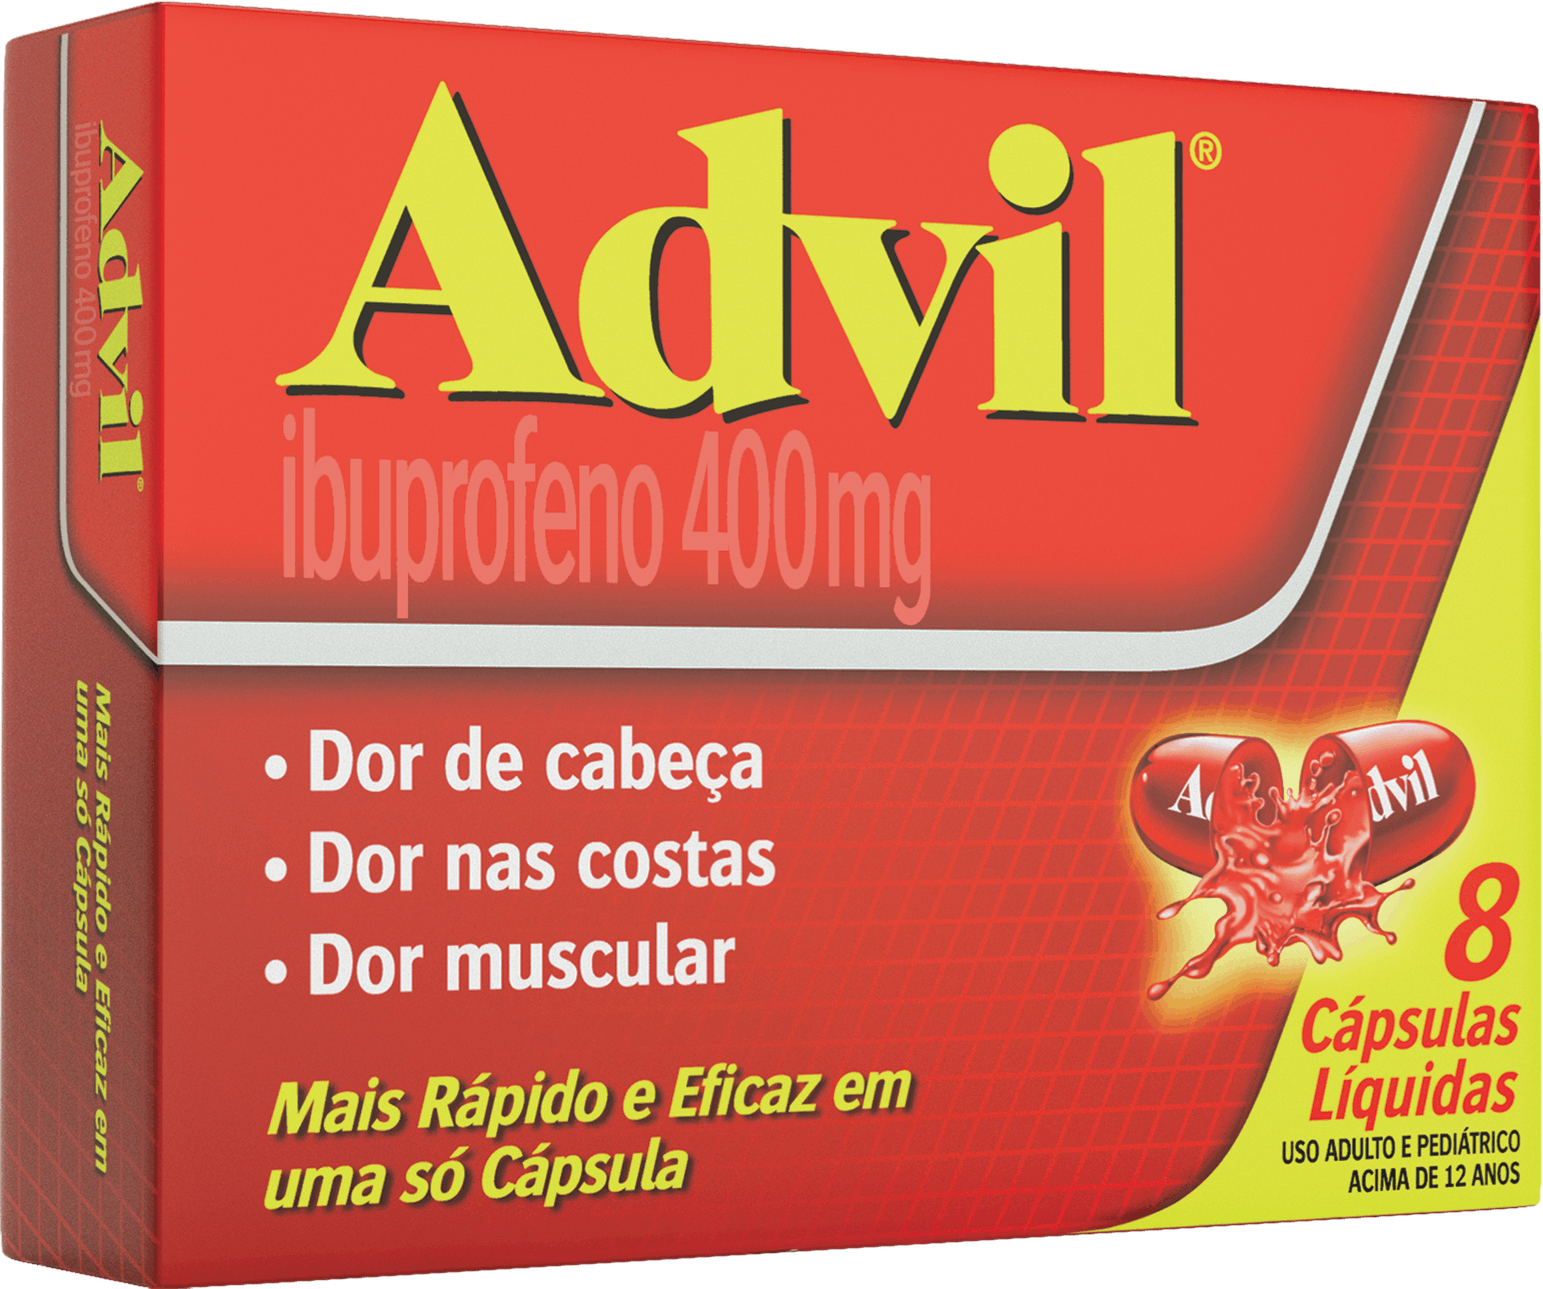 Advil 400mg